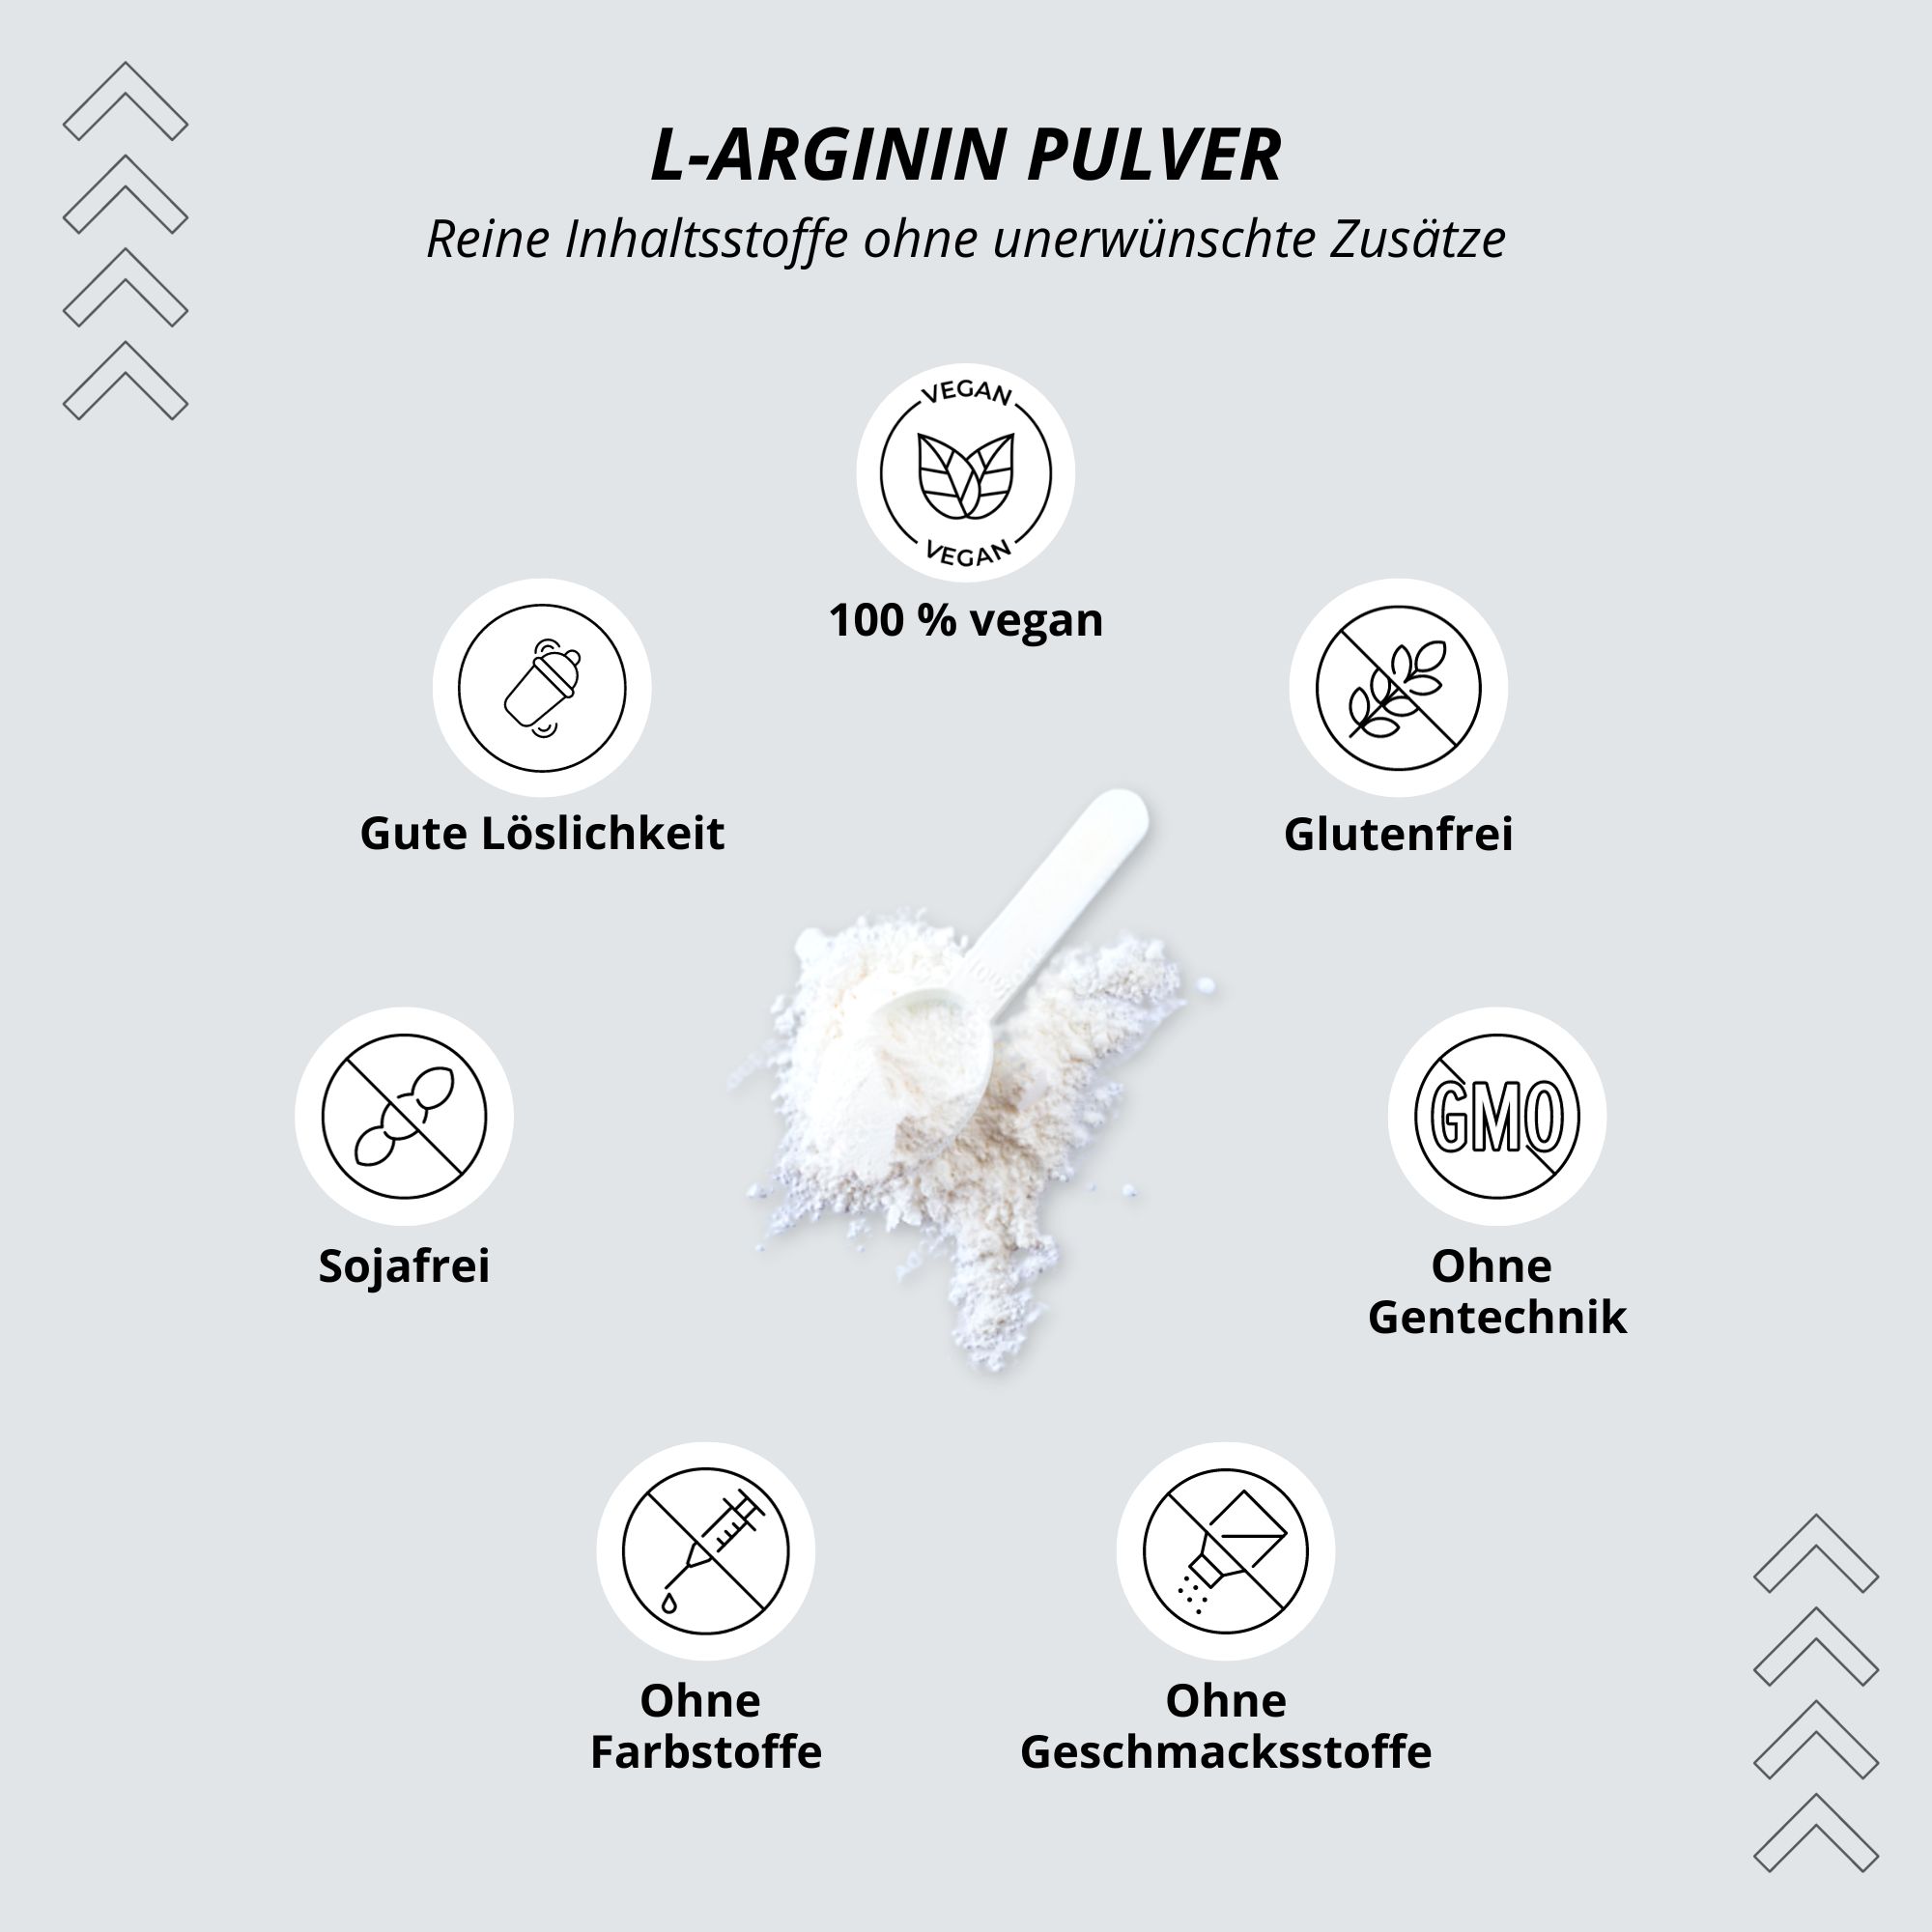 L-Arginin Base Powder